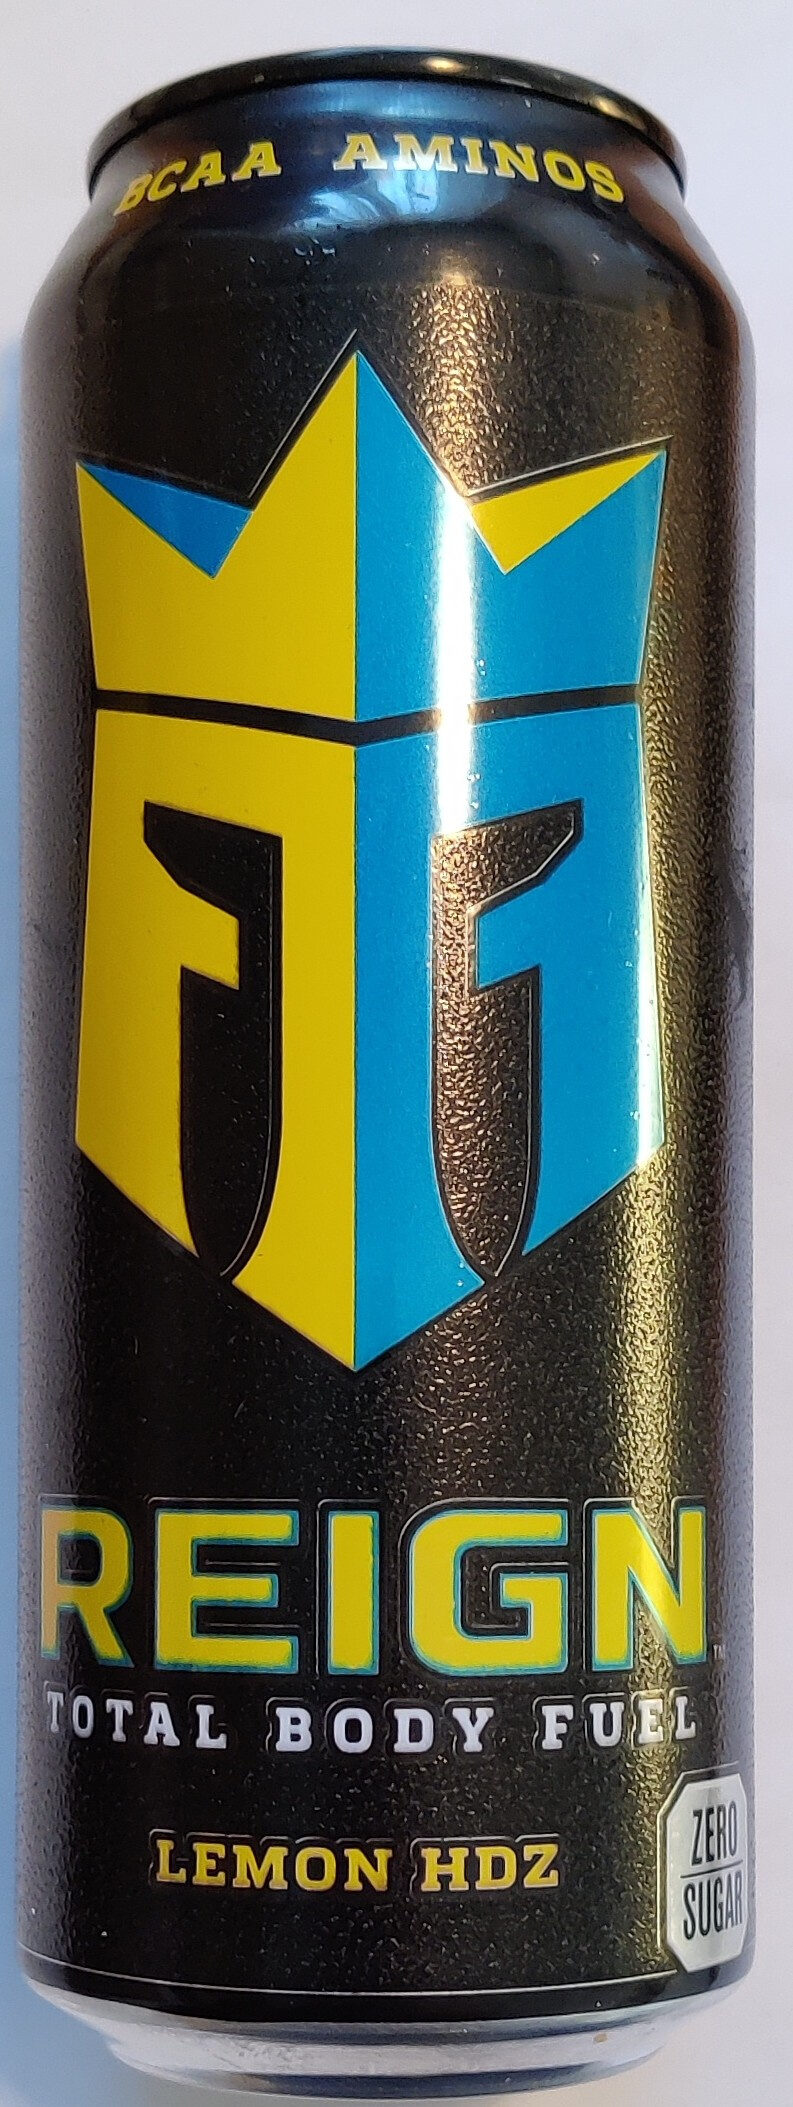 Reign Total Body Fuel - Lemon HDZ - Produkt - sv